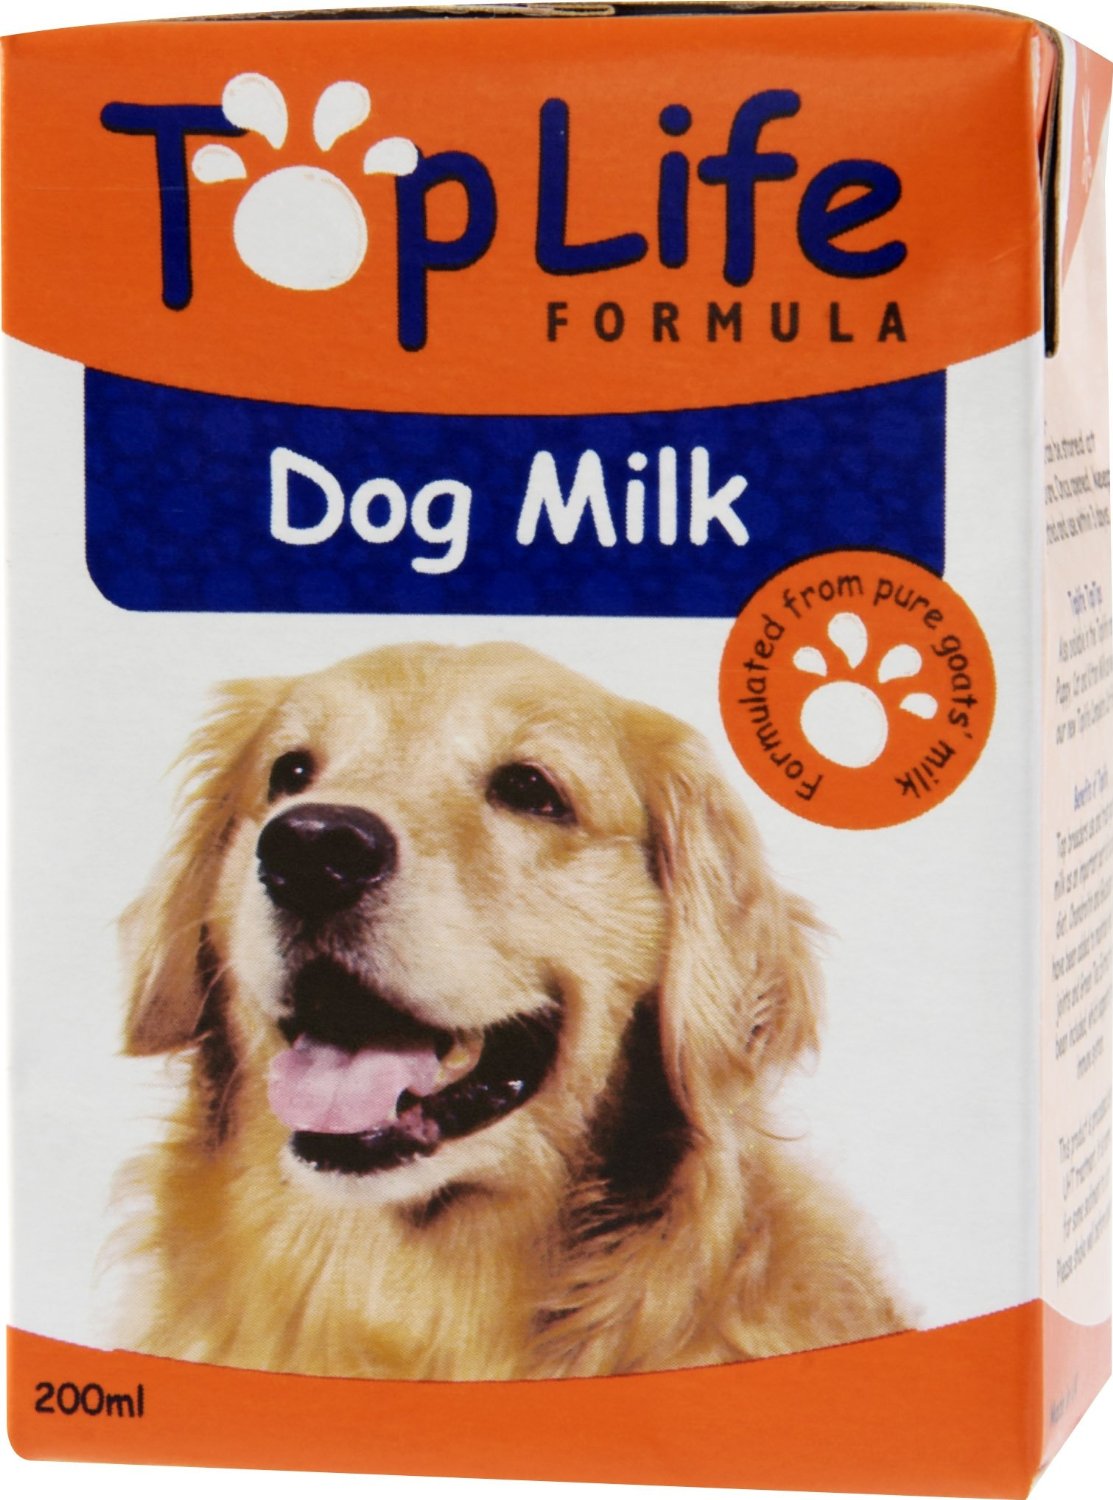 Toplife Dog Milk 200ml Carton x 18